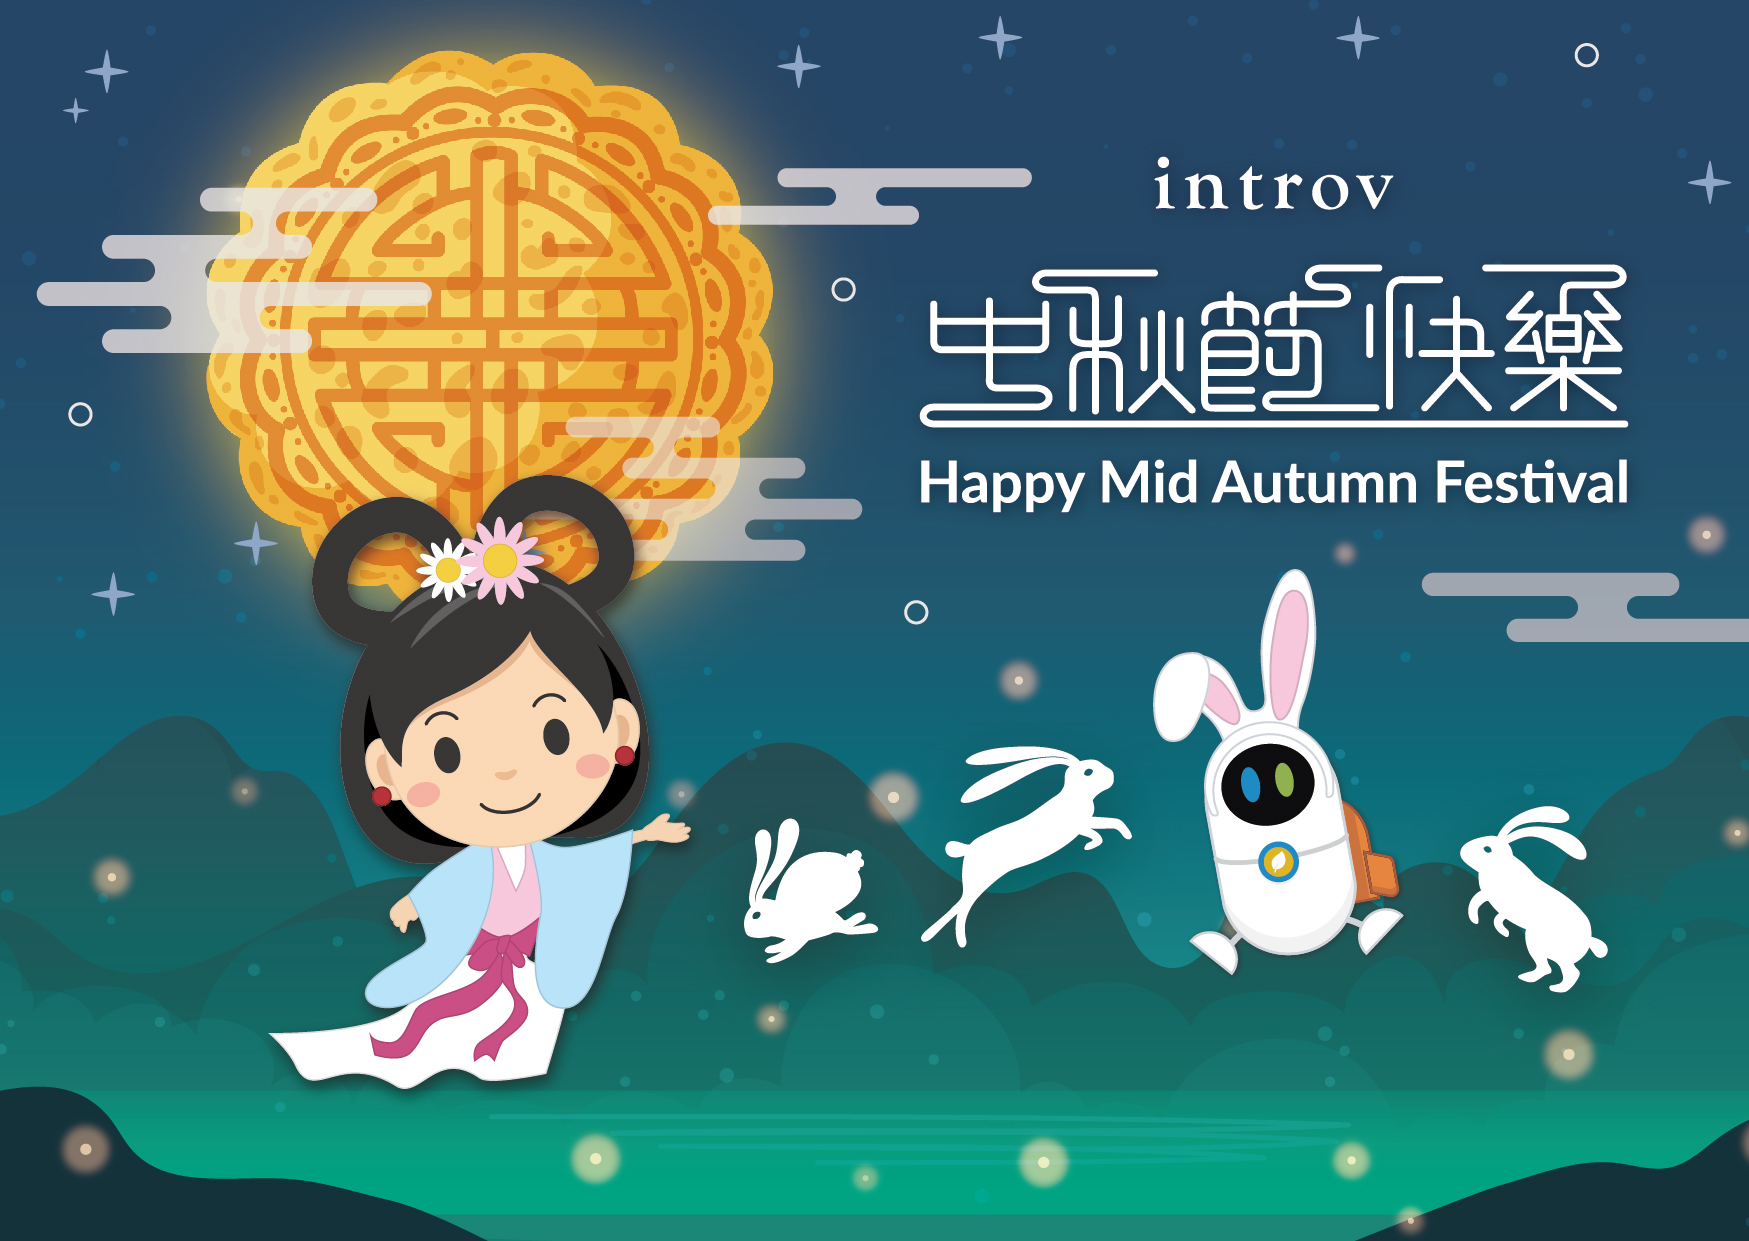 Happy Mid-Autumn Festival 2023